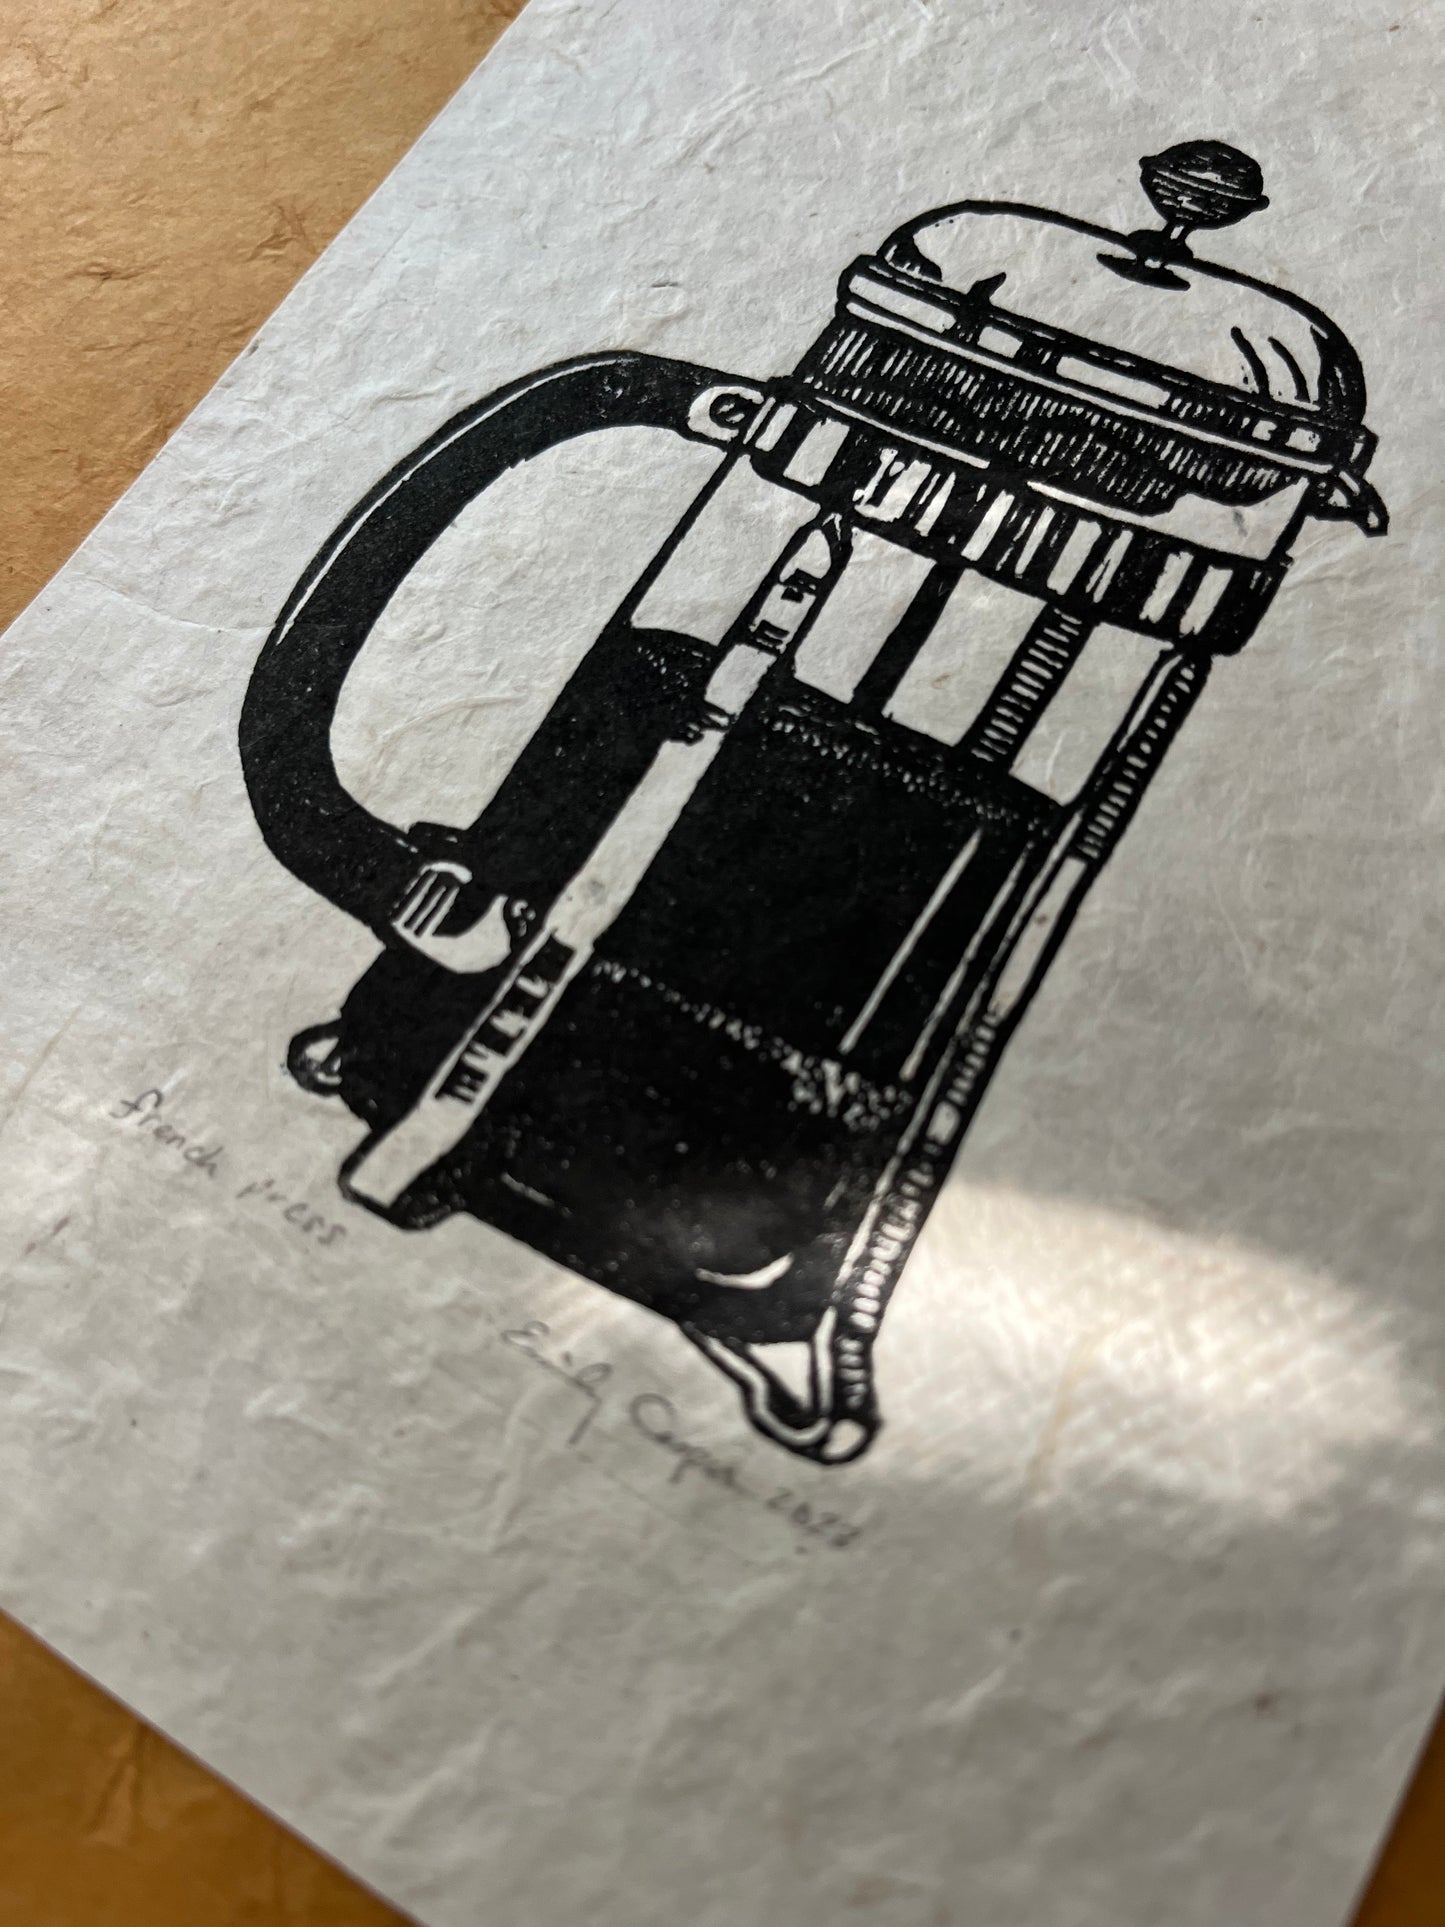 "French Press" Coffee Maker Linocut Print